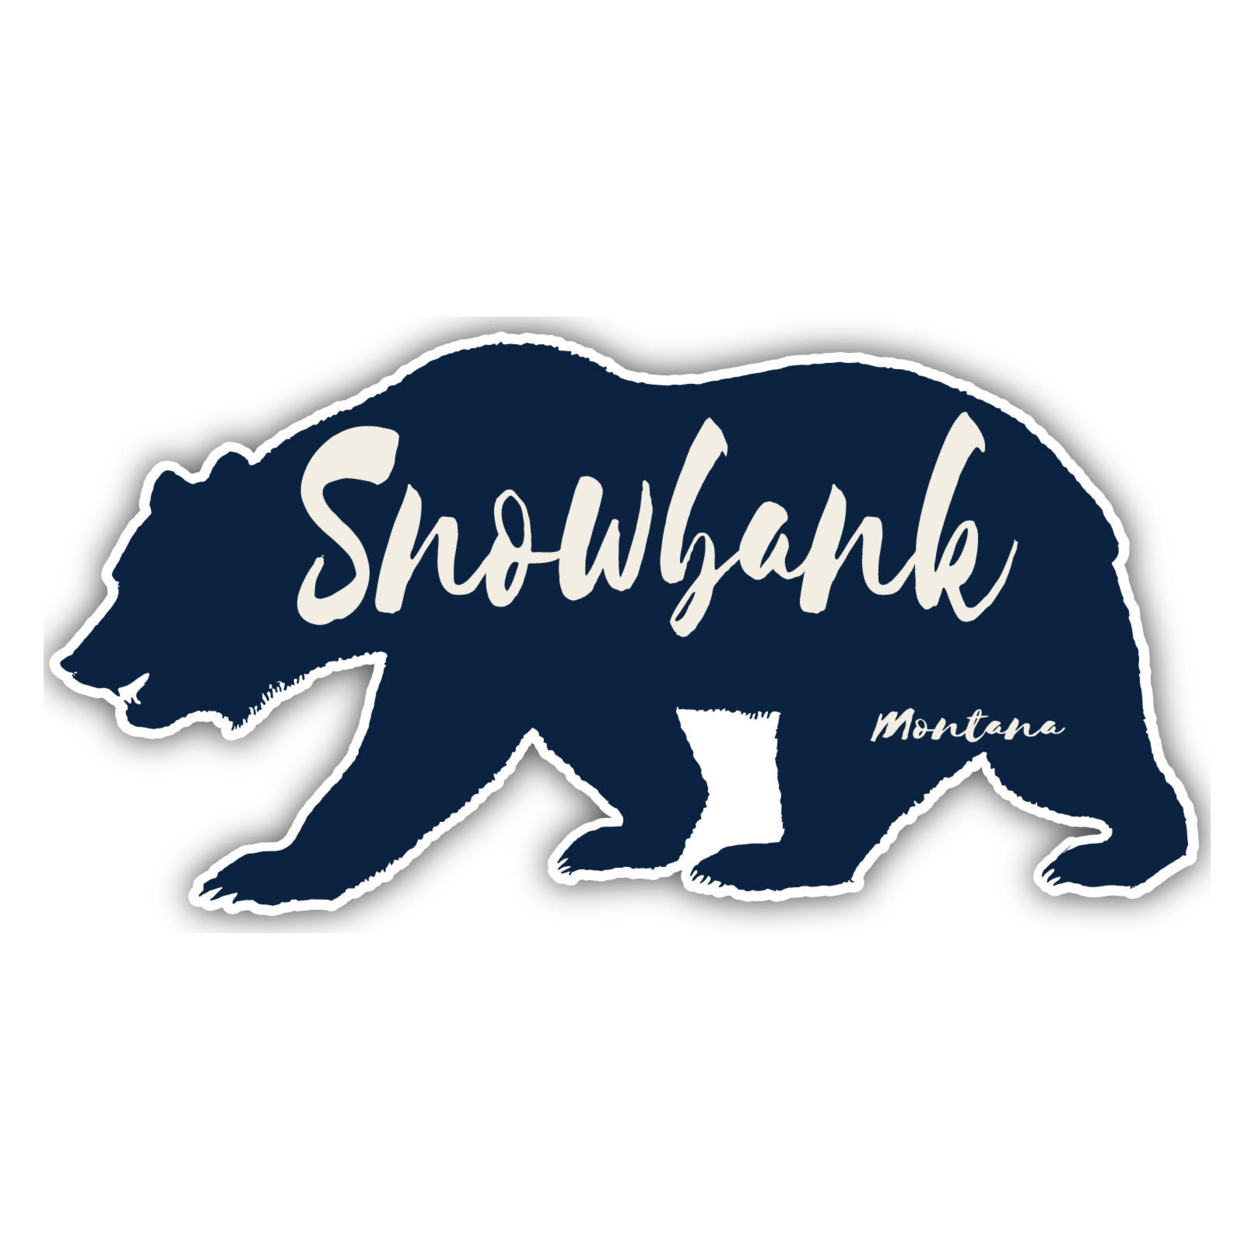 Snowbank Montana Souvenir Decorative Stickers (Choose Theme And Size) - Single Unit, 2-Inch, Bear